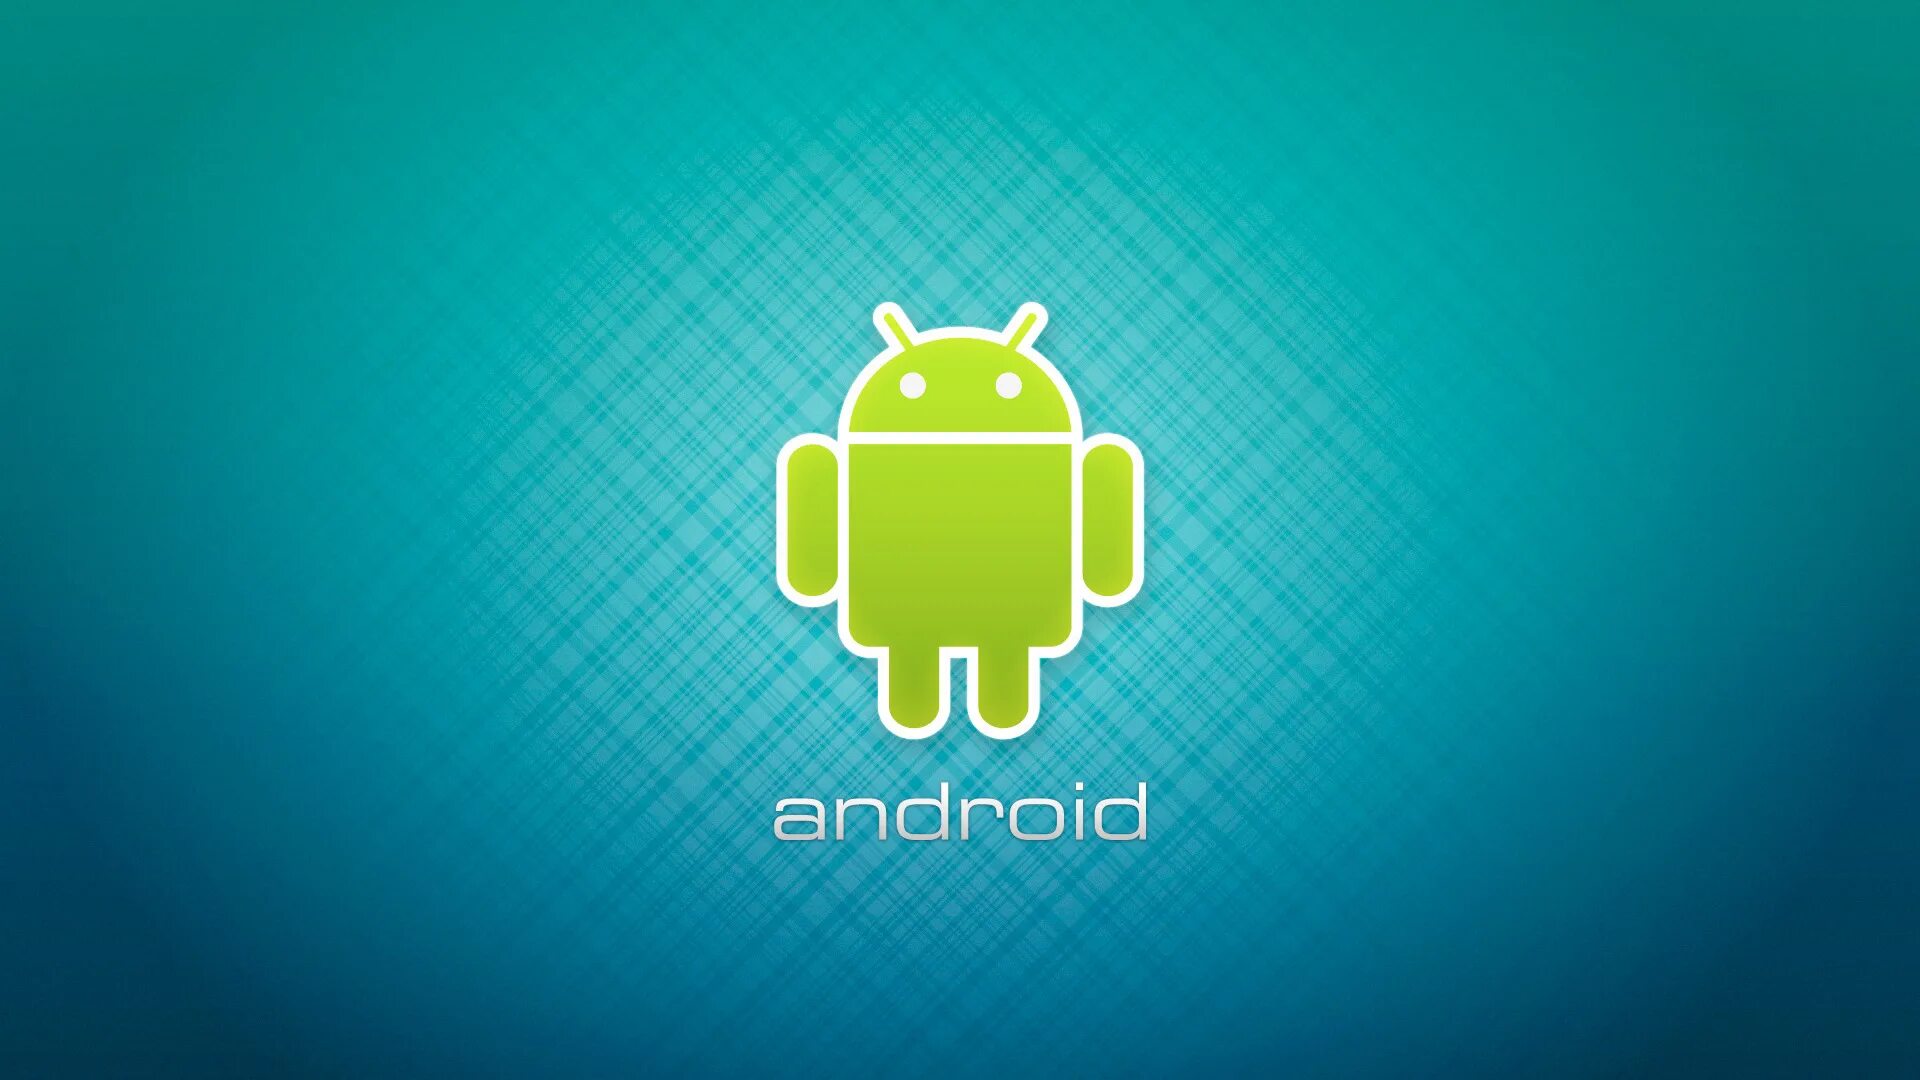 Android programmes. Андроид. Логотип андроид. Андро. Андроид рисунок.